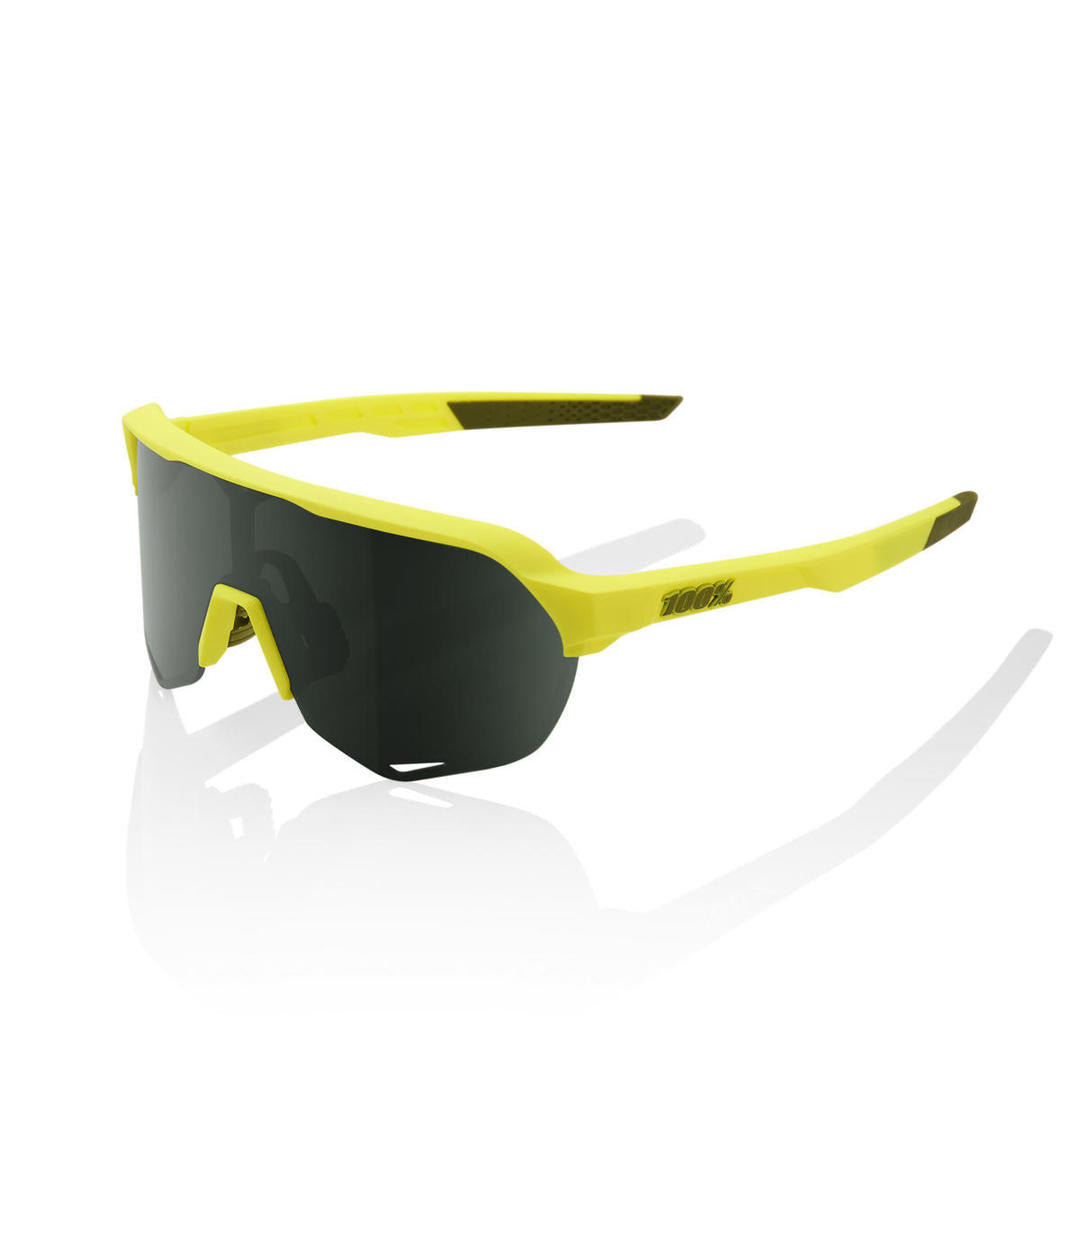 RIDE 100% Gafas de Sol S2 - Soft Tact Banana/Grey Green Lens